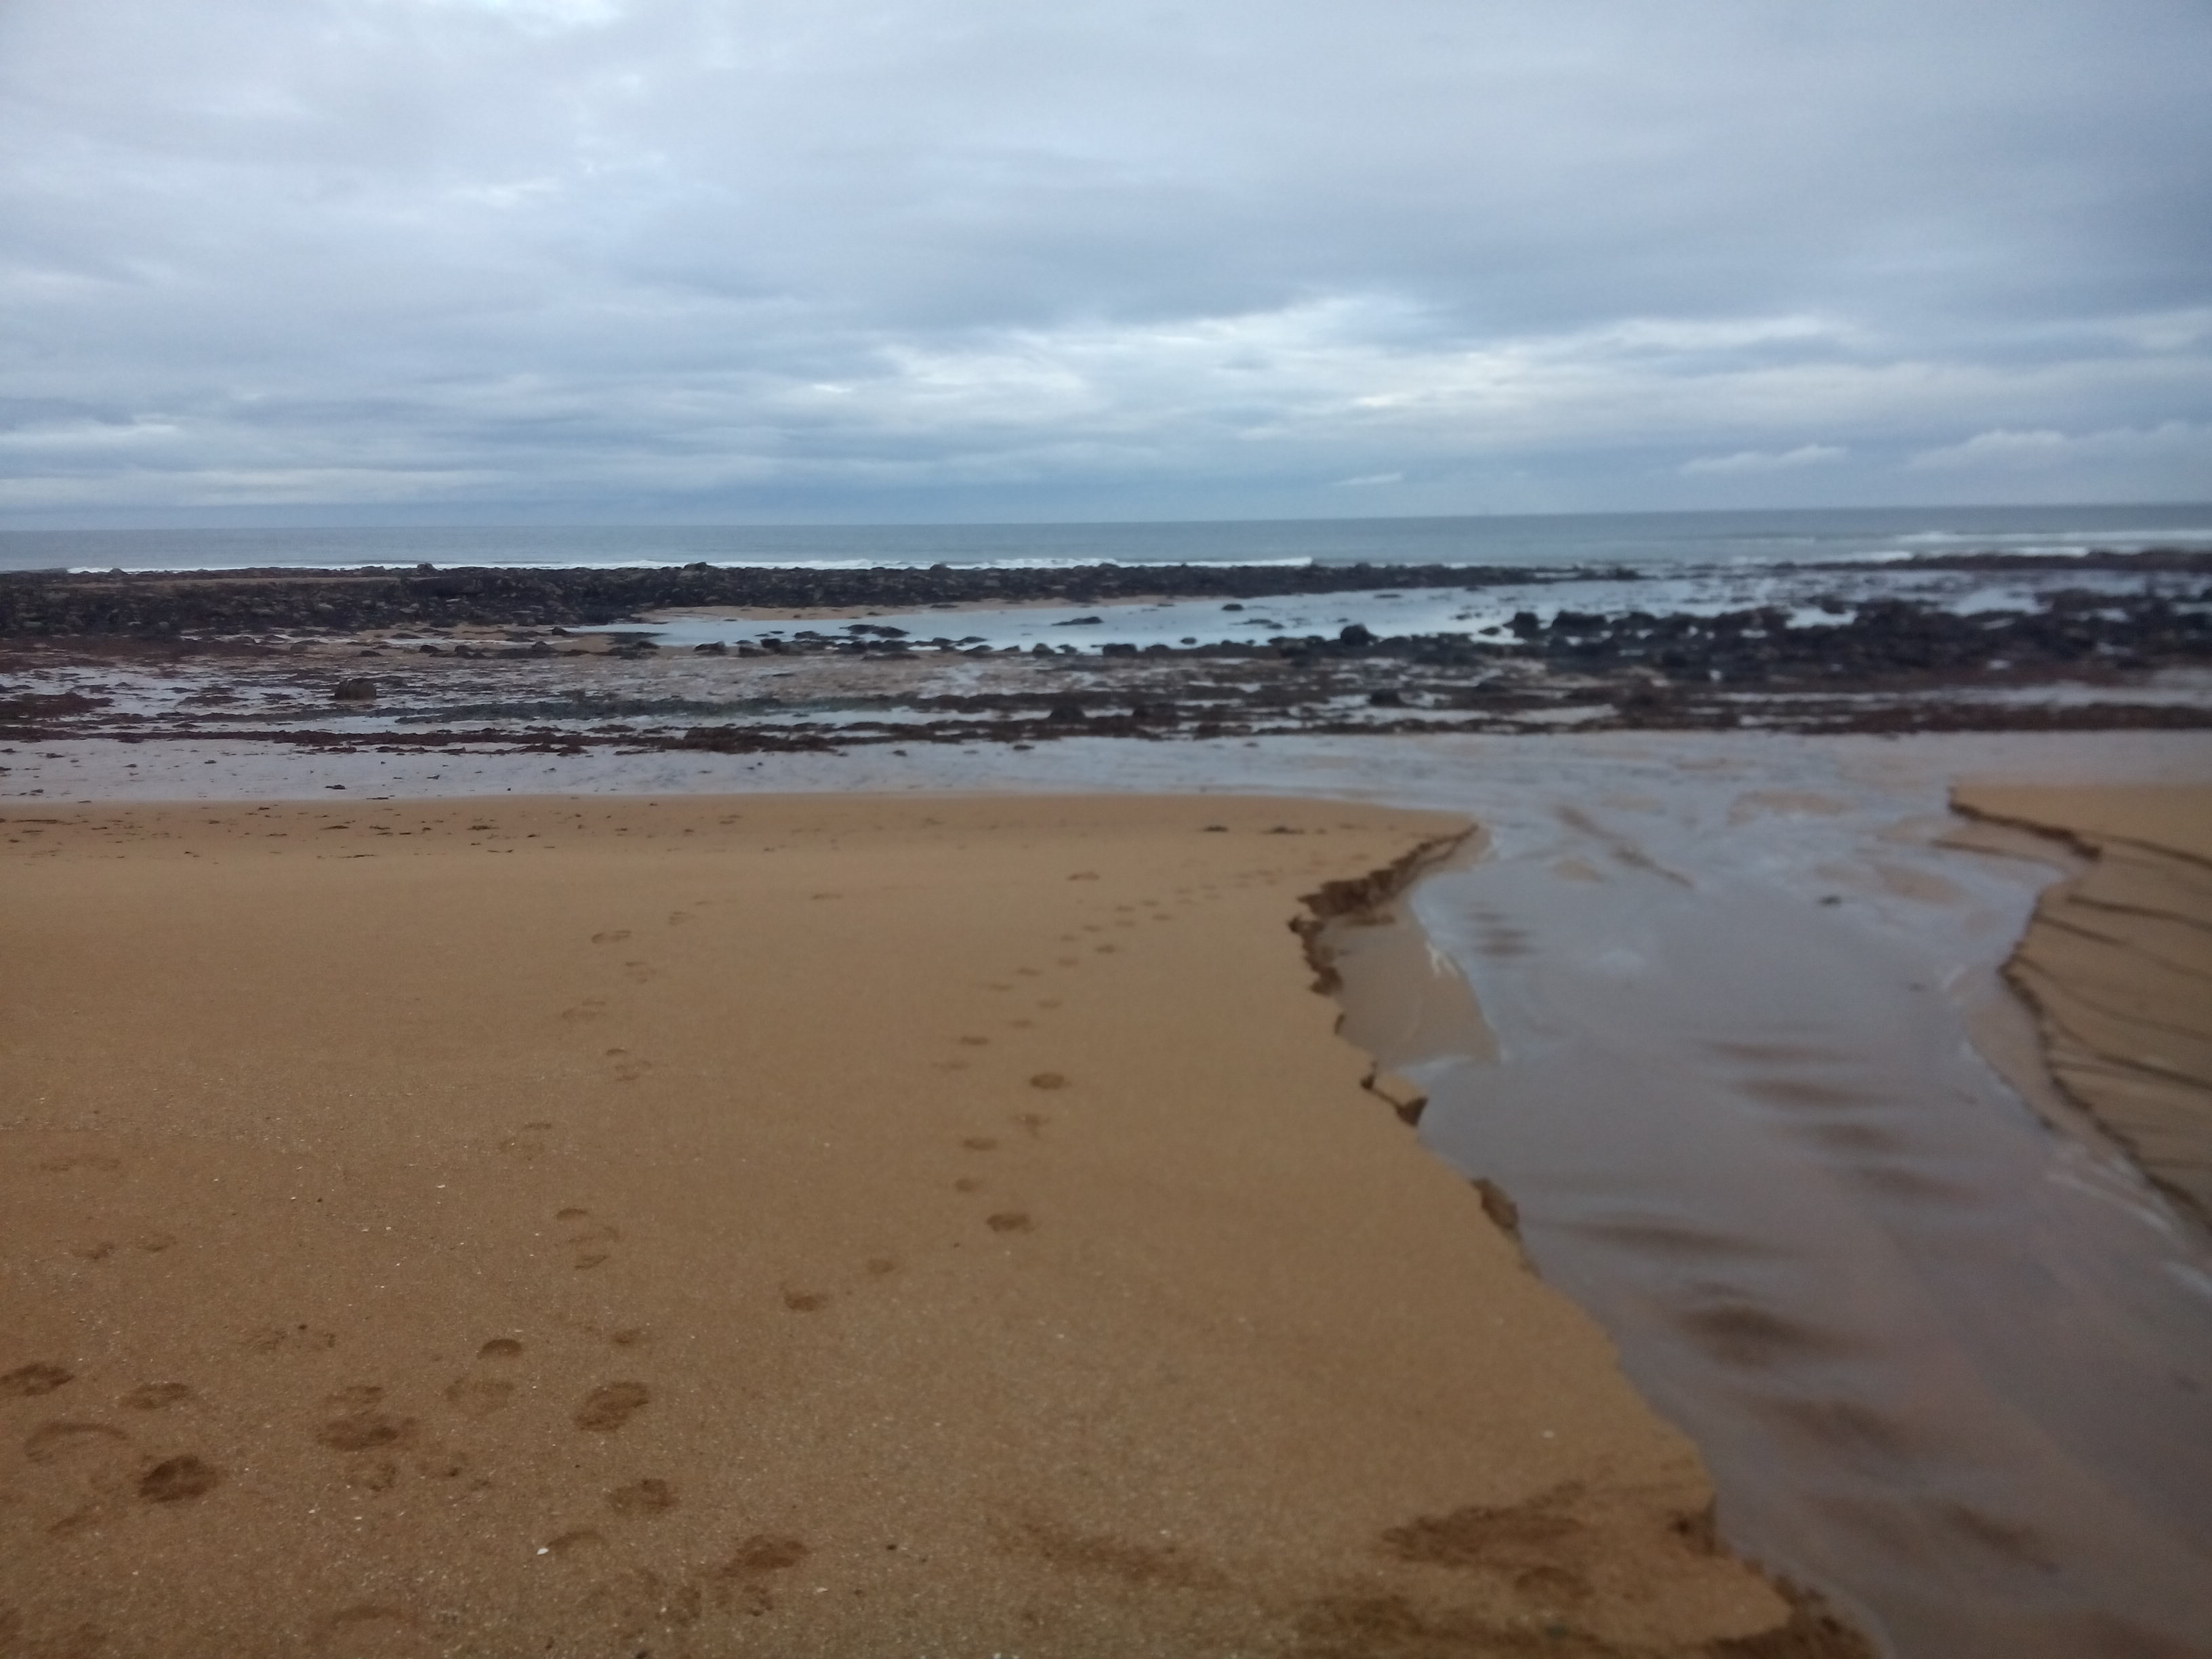 A golden, wet sandy beach, cut through with rivulets of water, under grey-blue clouds